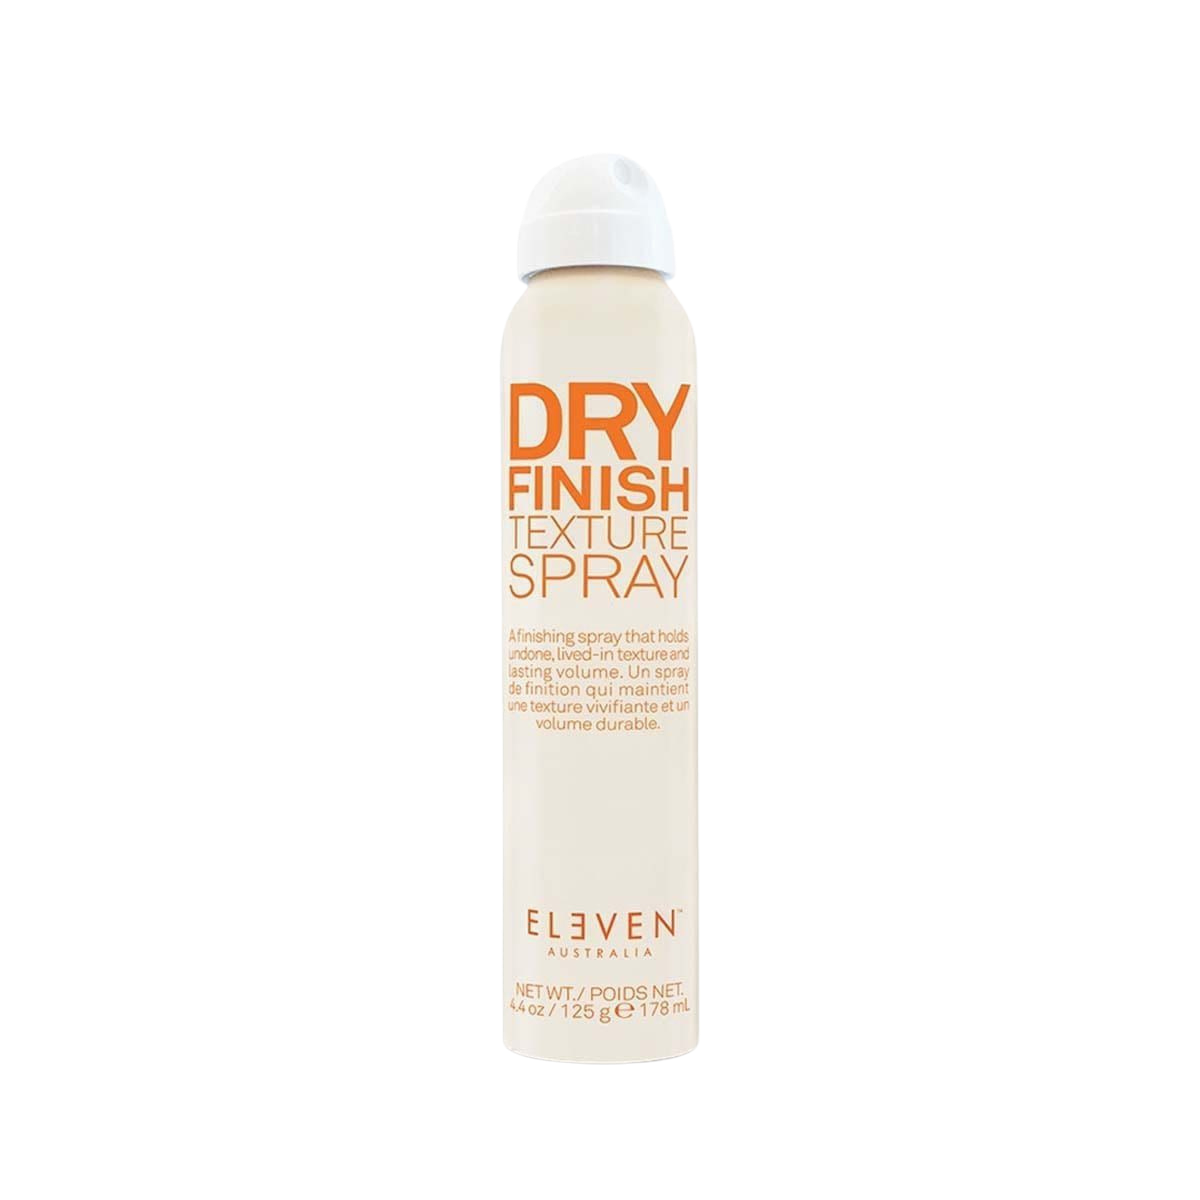 Eleven Australia Dry Finish Texture Spray 4.4 oz